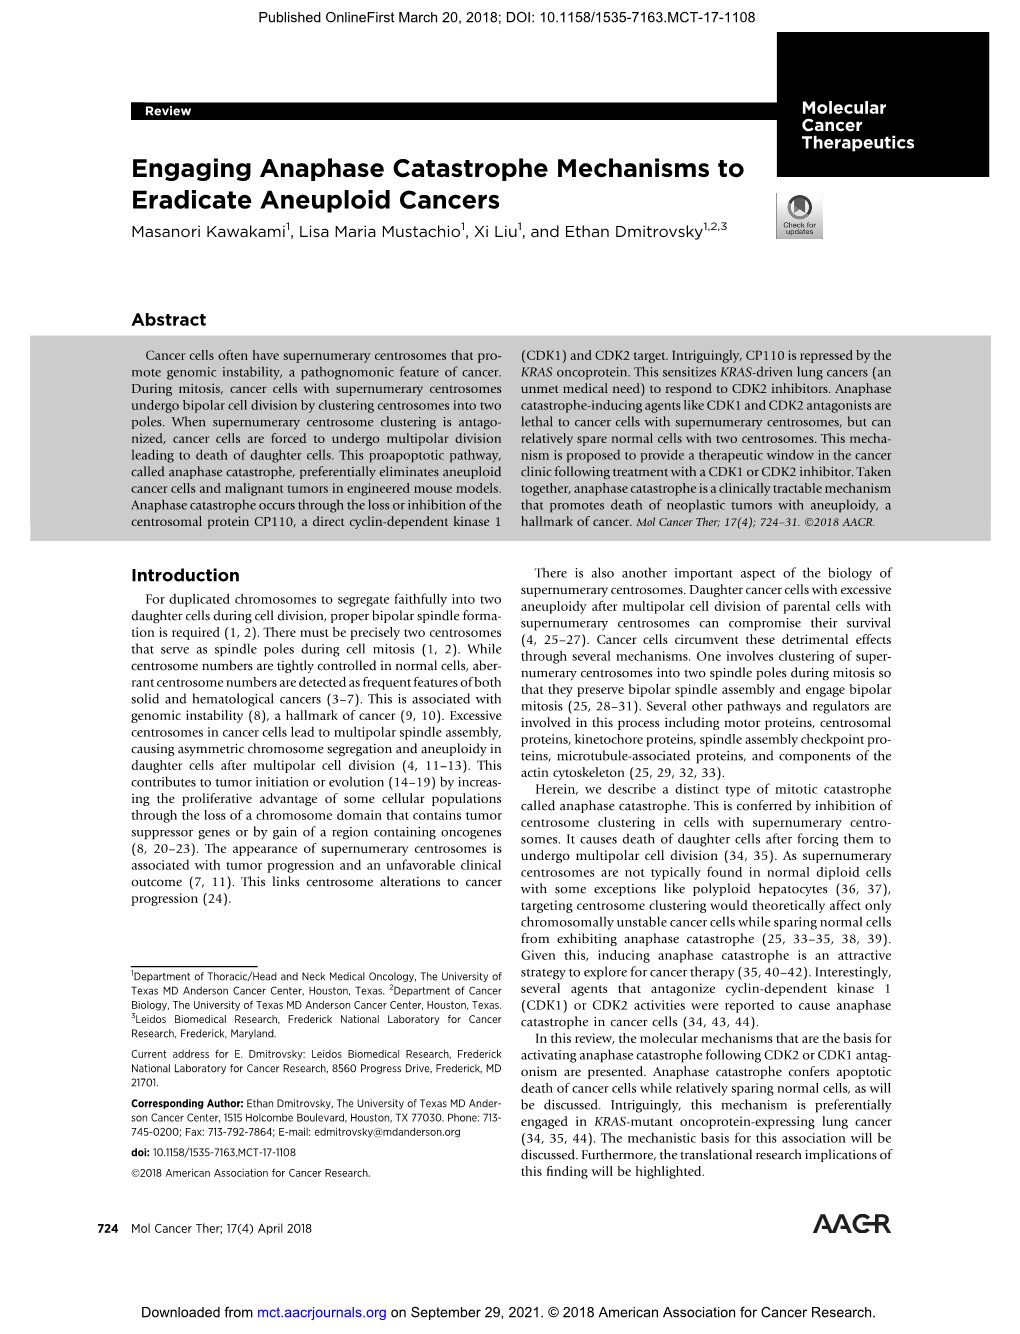 Engaging Anaphase Catastrophe Mechanisms to Eradicate Aneuploid Cancers Masanori Kawakami1, Lisa Maria Mustachio1,Xiliu1, and Ethan Dmitrovsky1,2,3